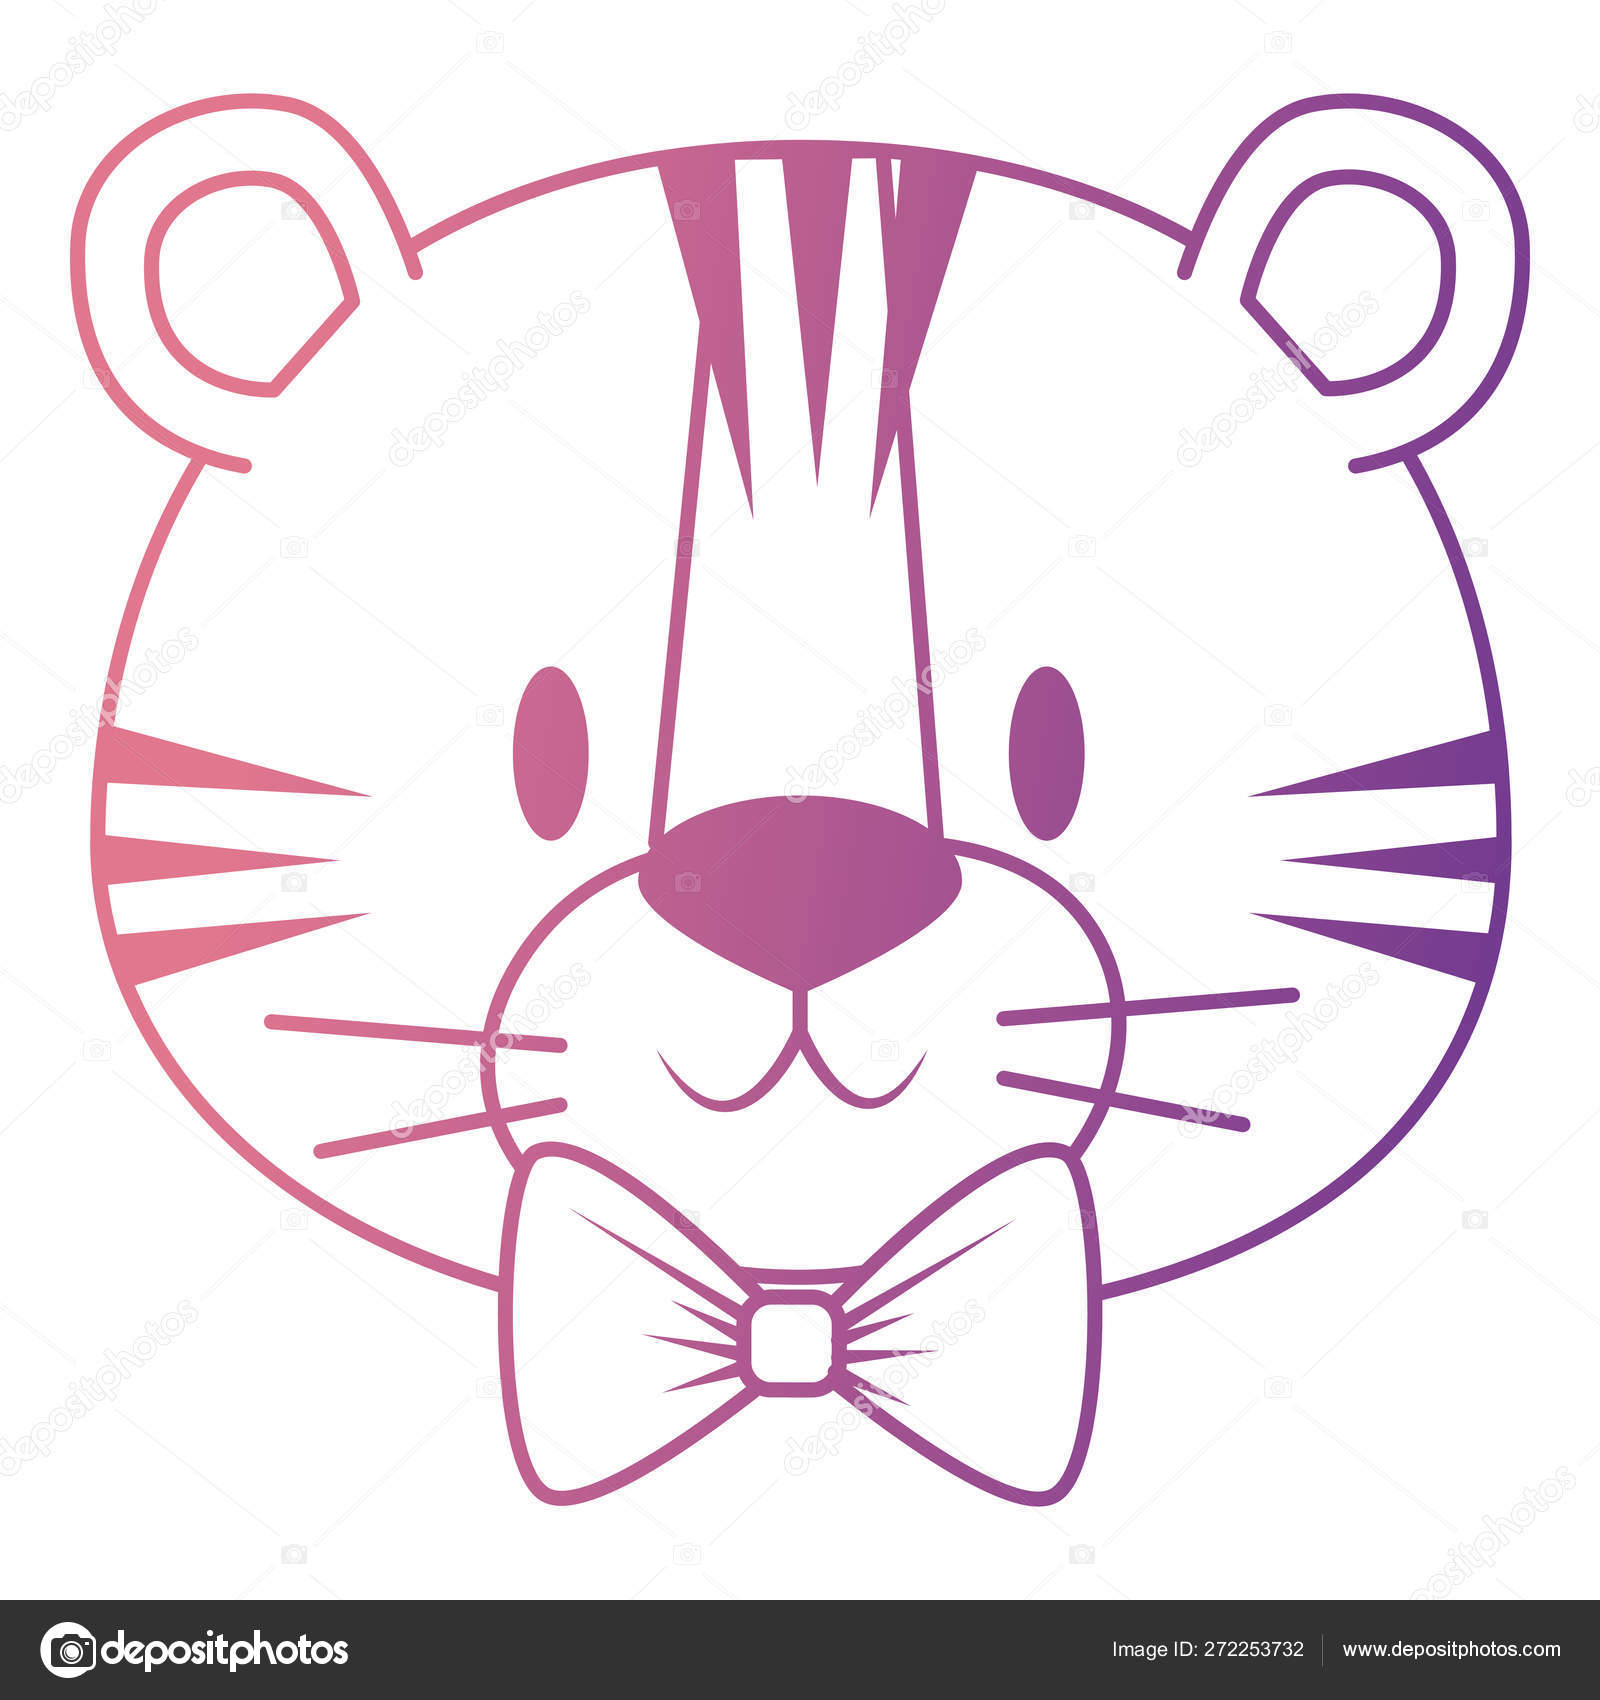 https://st4.depositphotos.com/1007566/27225/v/1600/depositphotos_272253732-stock-illustration-cute-and-adorable-tiger-character.jpg